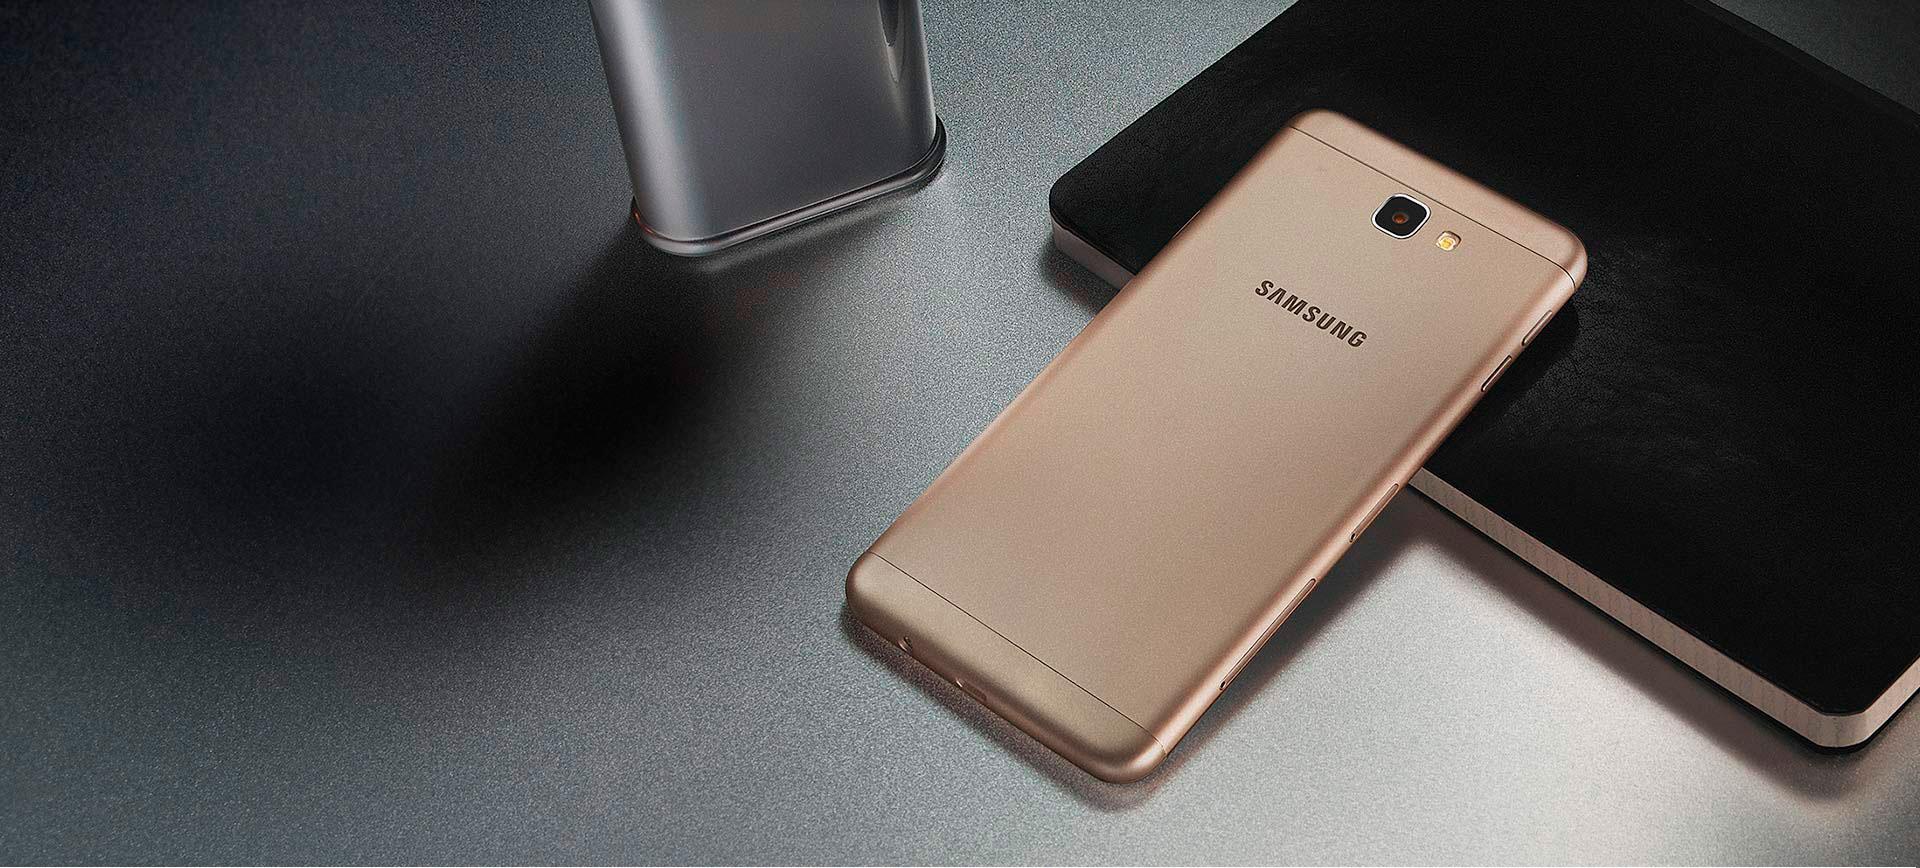 Samsung Galaxy J5 Prime dorado